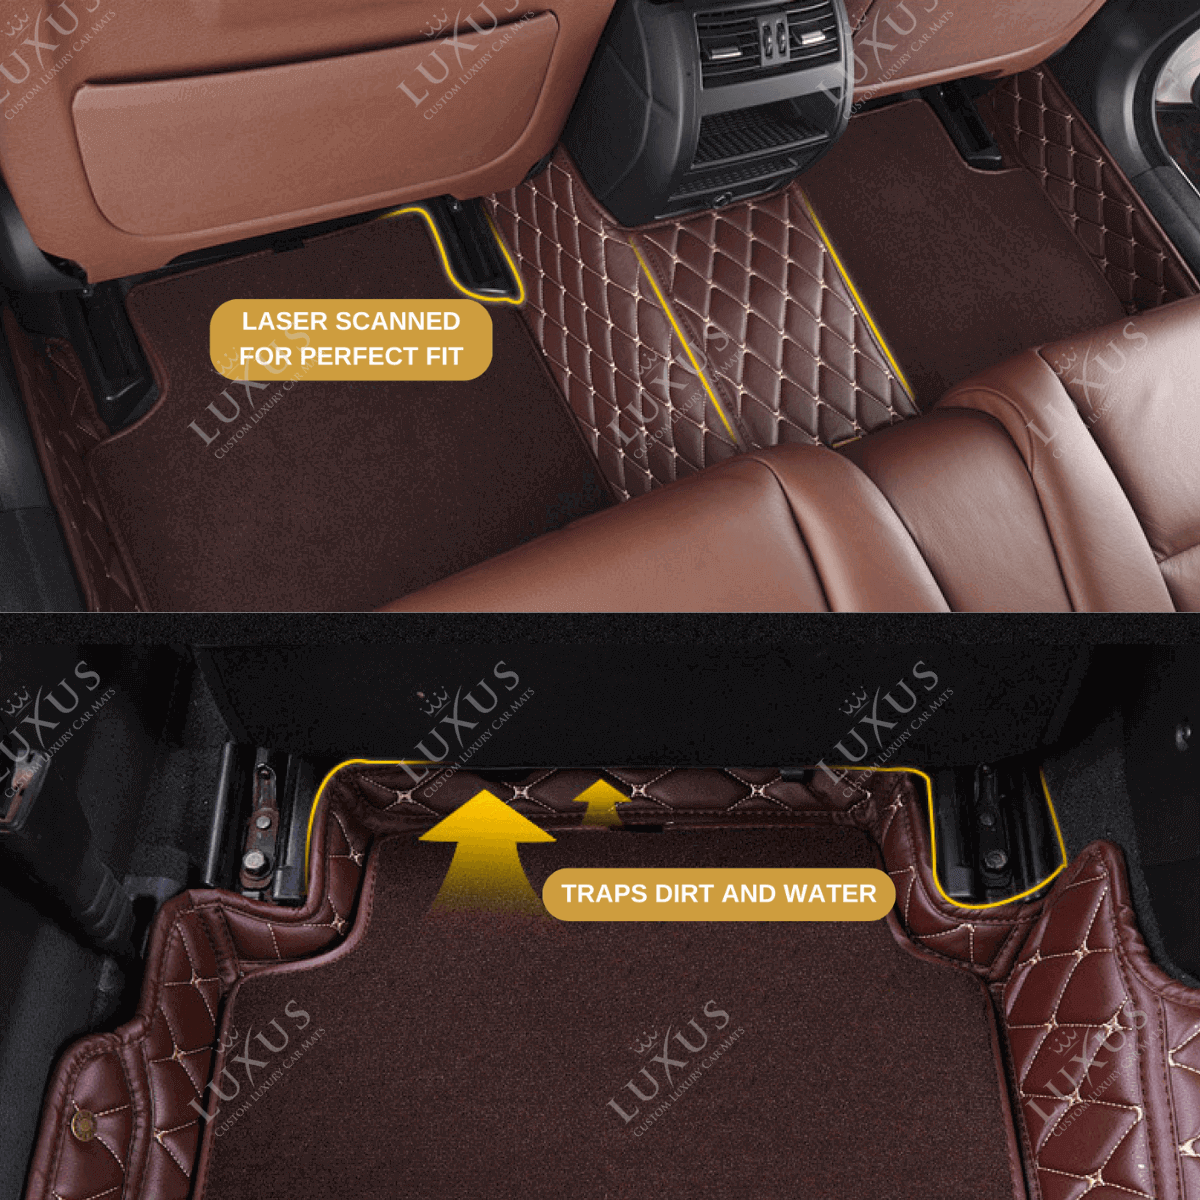 Chocolate Brown Diamond Base & Brown Top Carpet Double Layer Luxury Car Mats Set